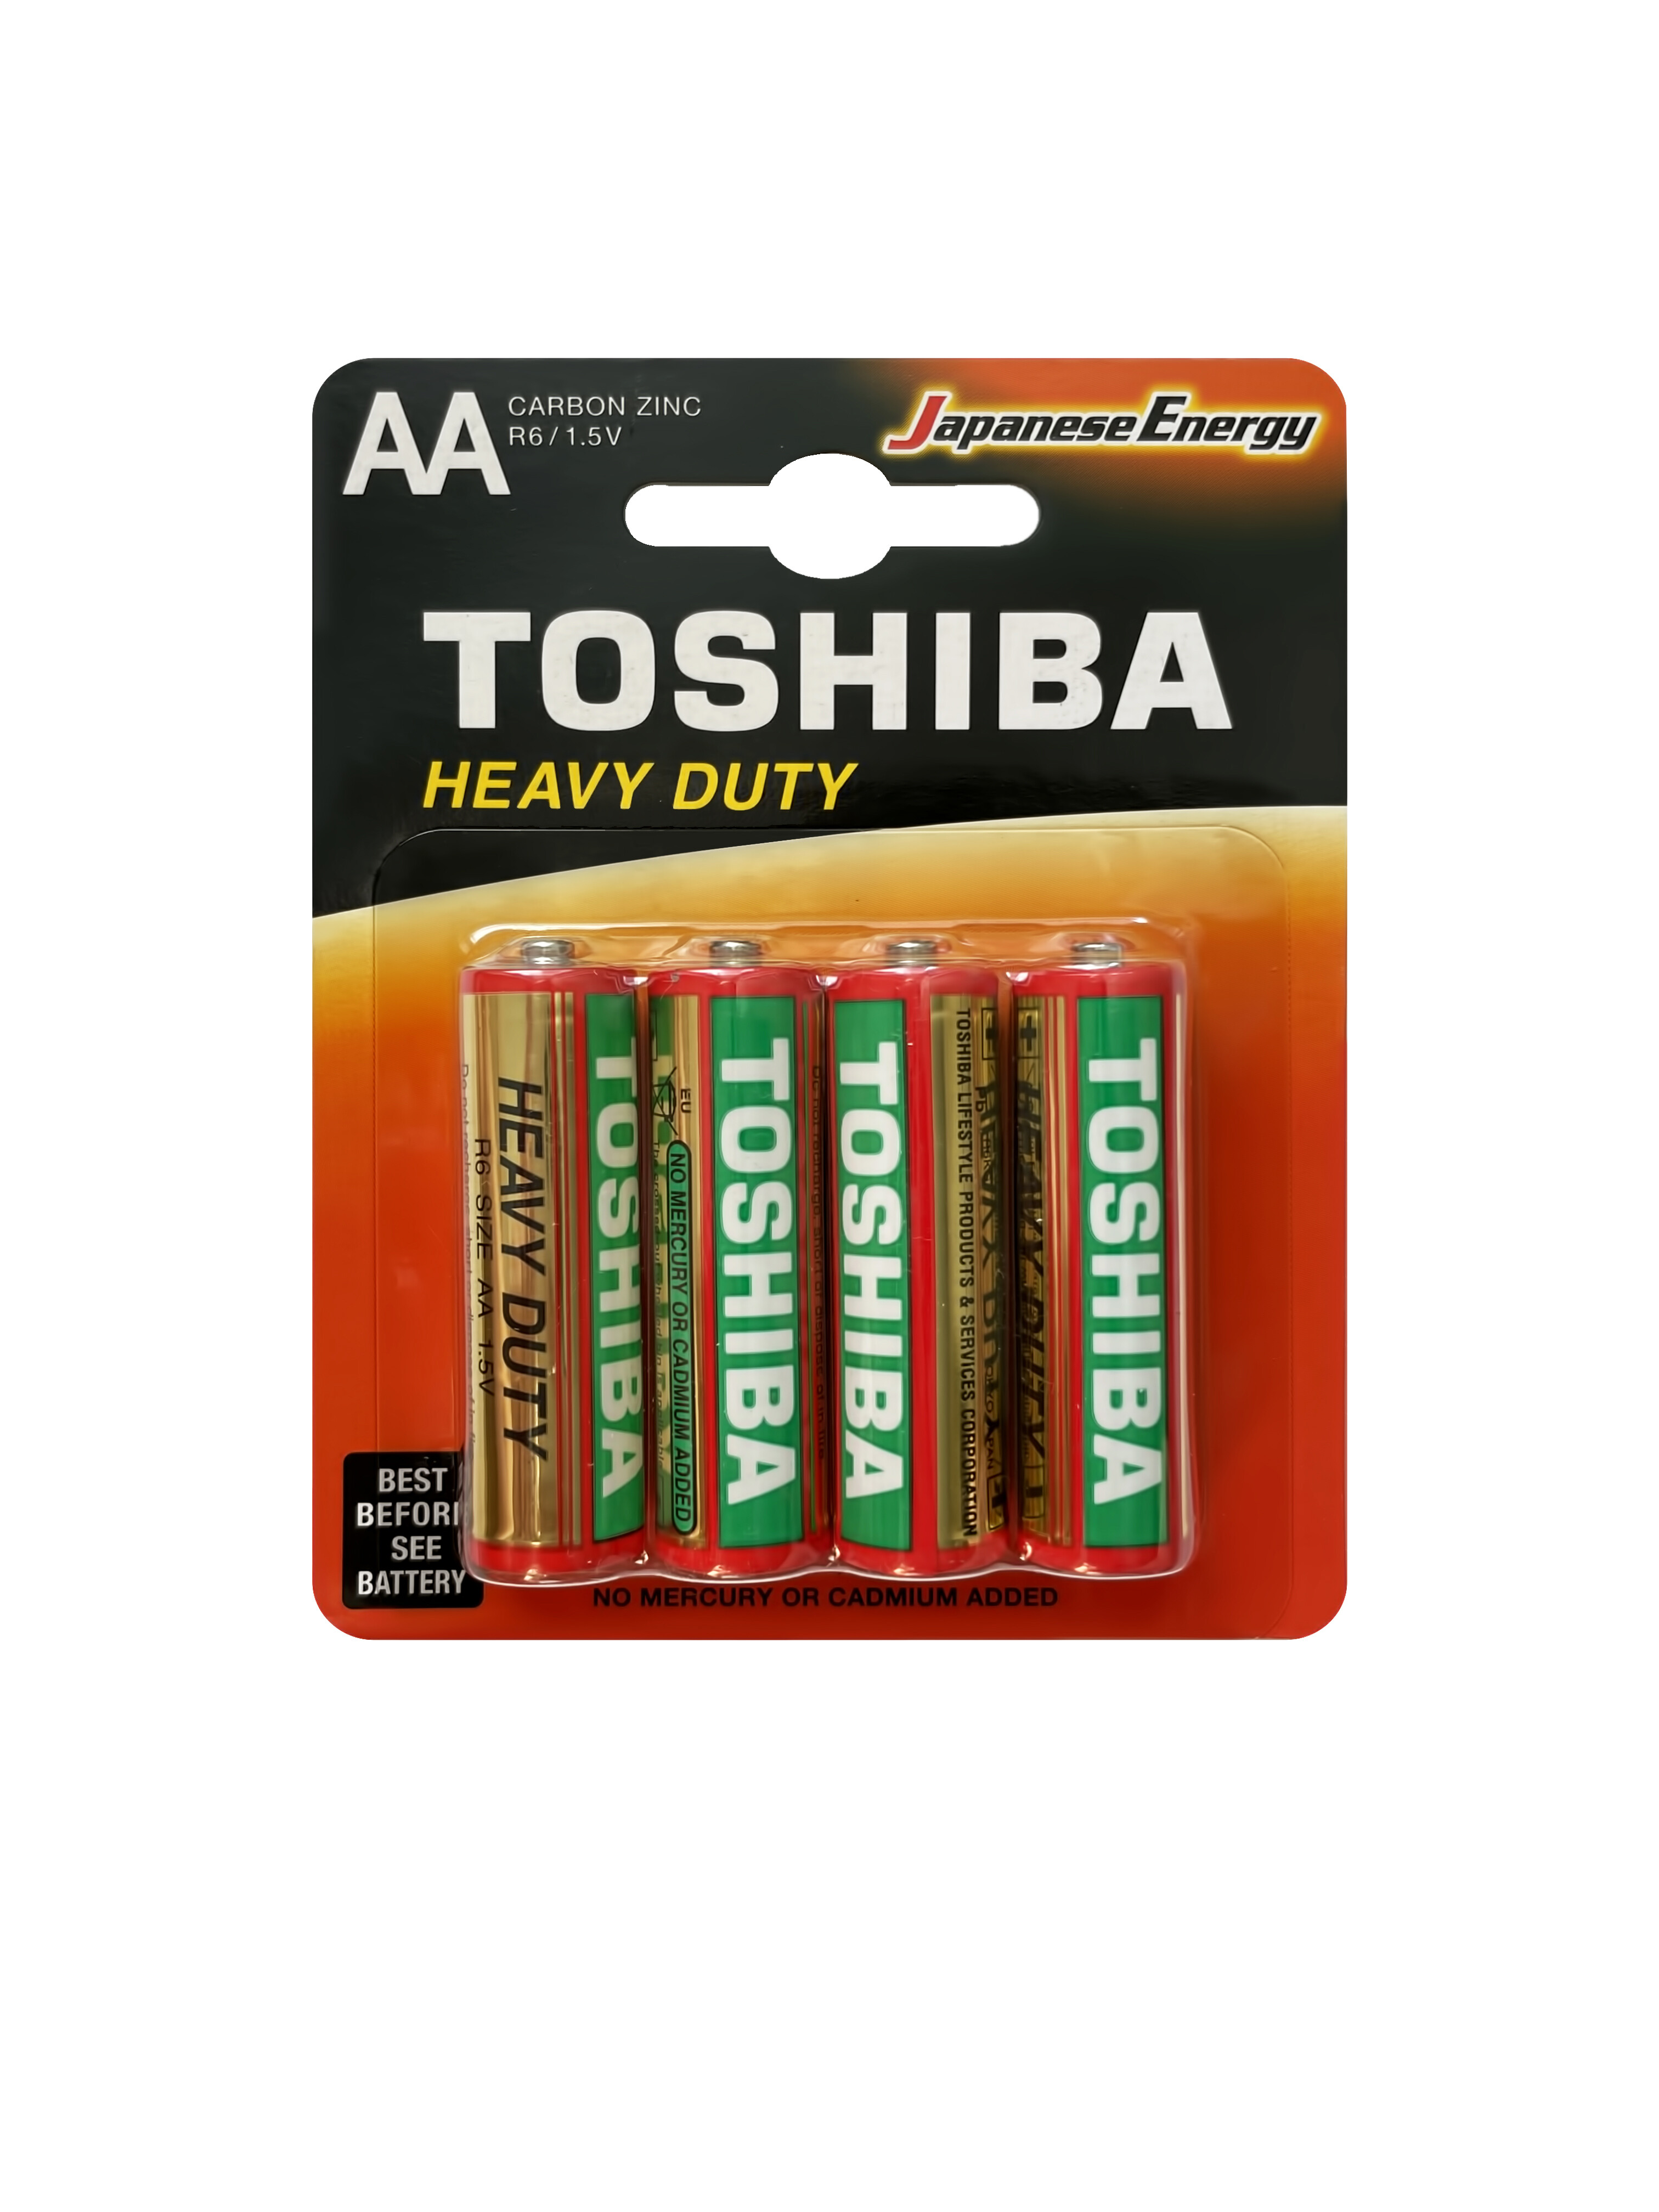 Батарейки Toshiba R6 солевые (zinc) ПАЛЬЧИК Heavy Duty (4шт) AA 1,5V столярный угольник heavy duty 350 мм stayer 3430 35 z01